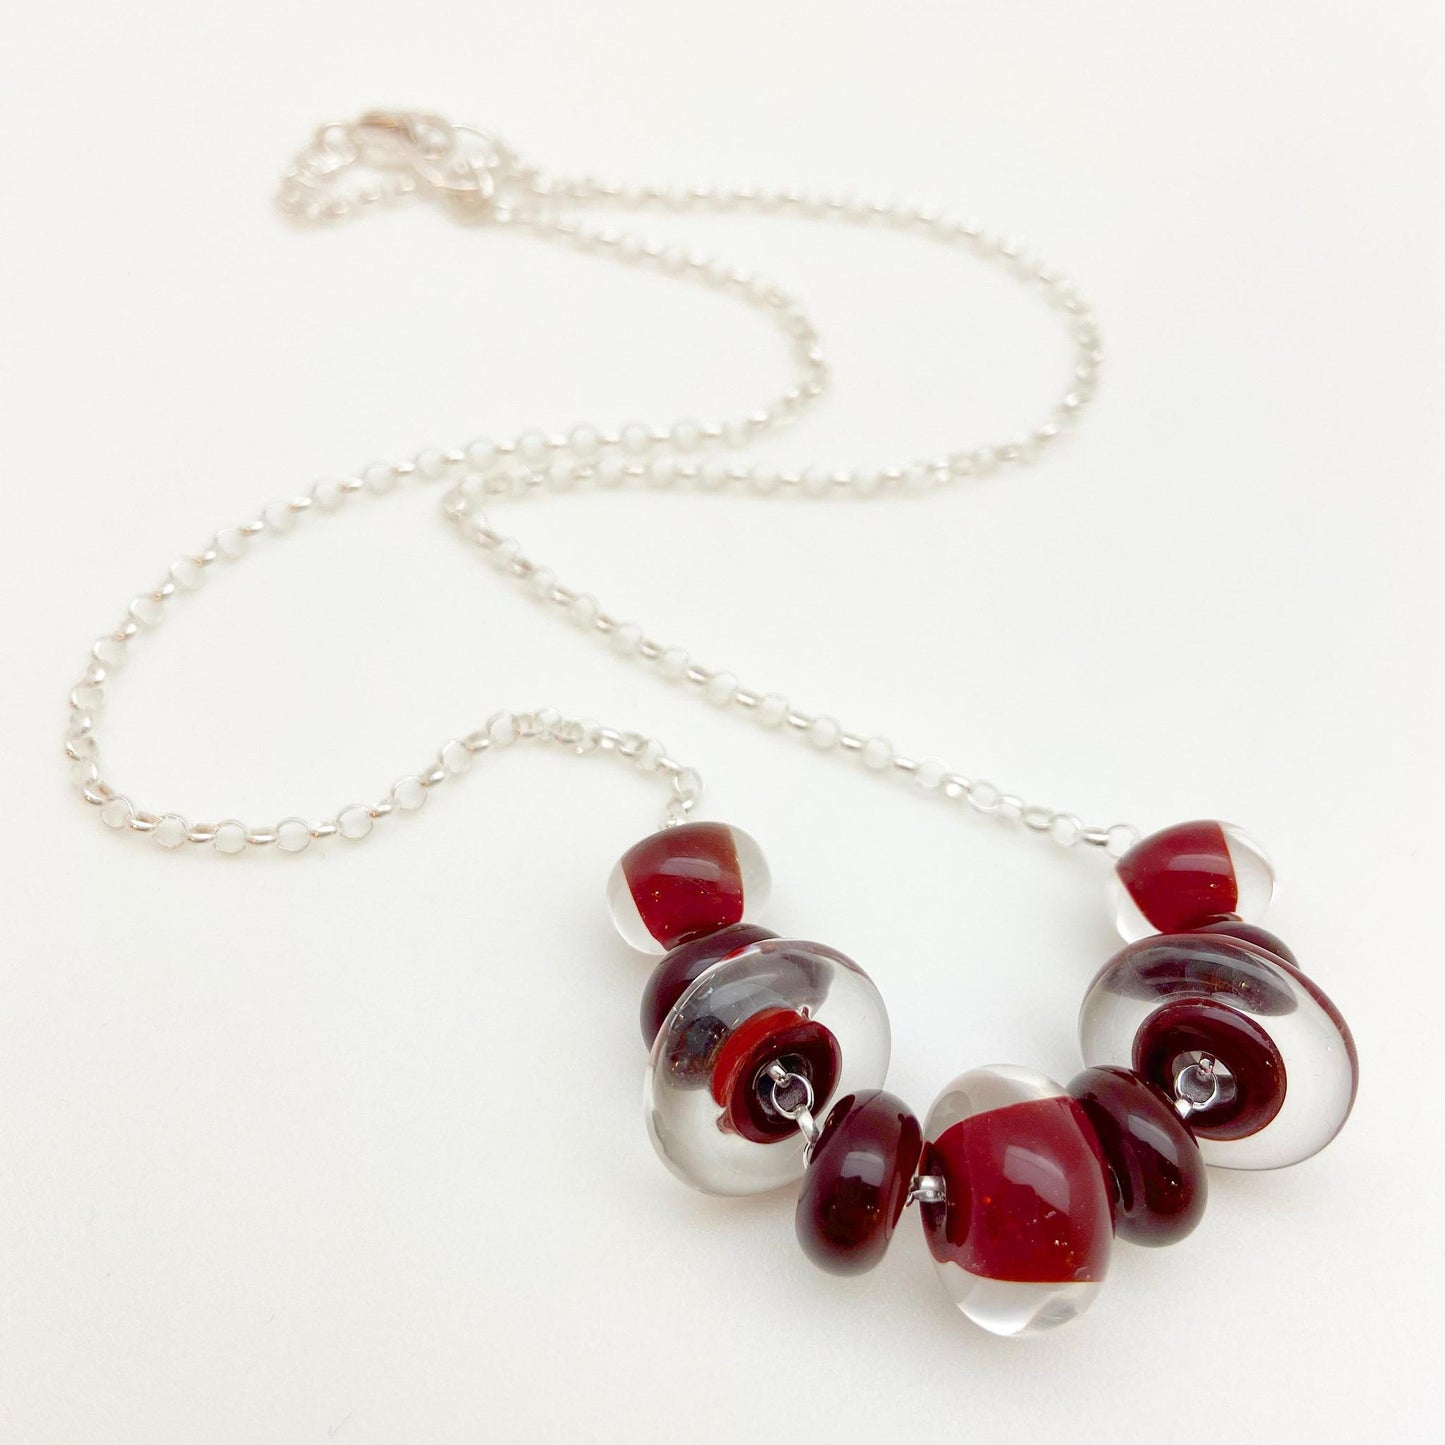 Necklace - Glass "Lifesaver" Beads - Dark Red